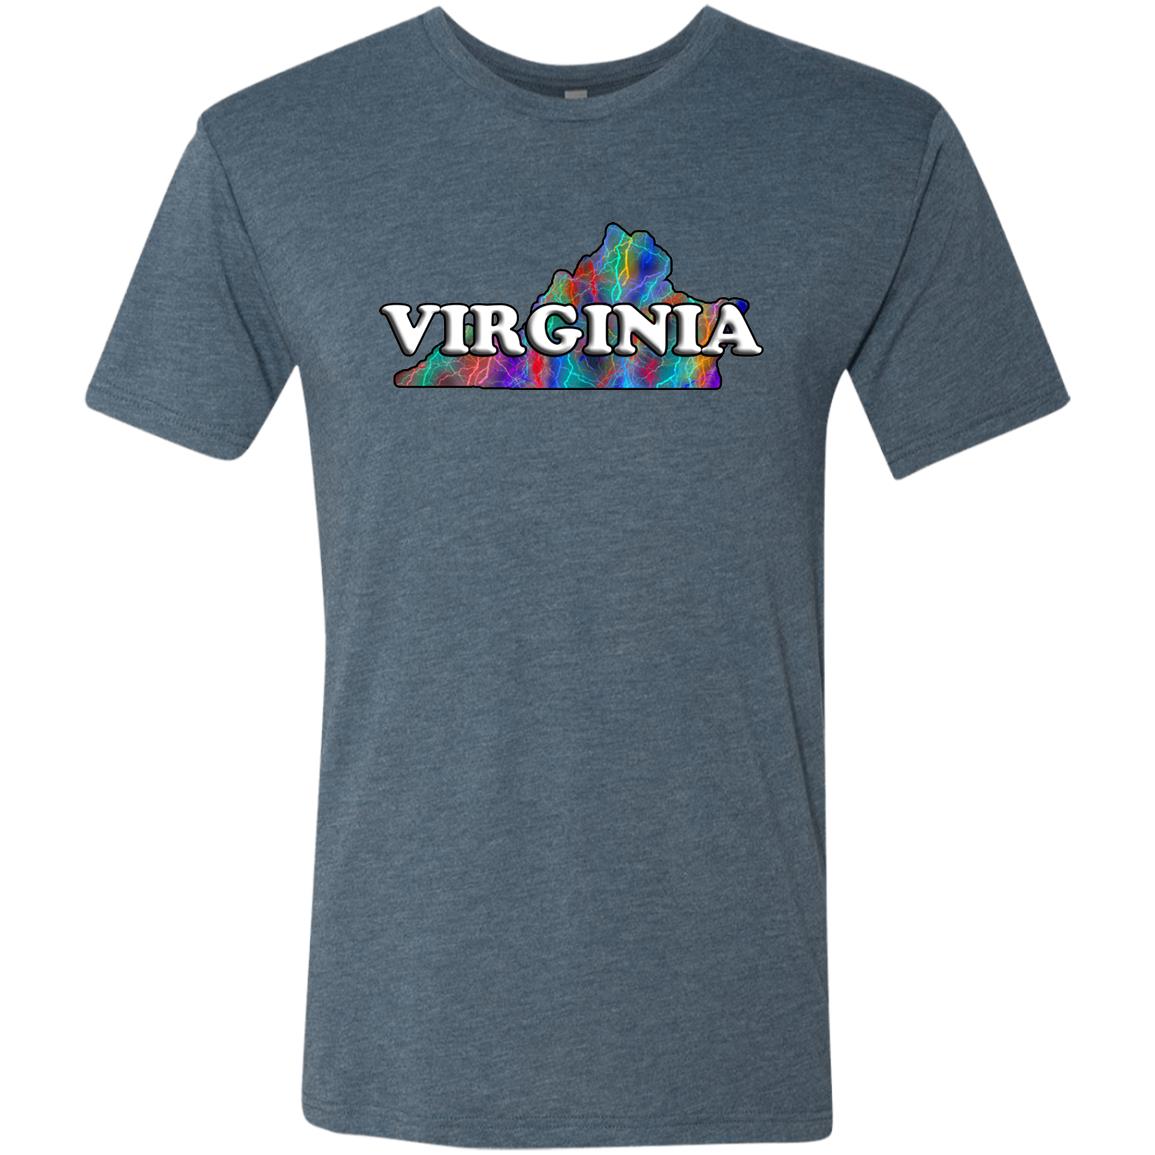 Virginia State T-Shirt